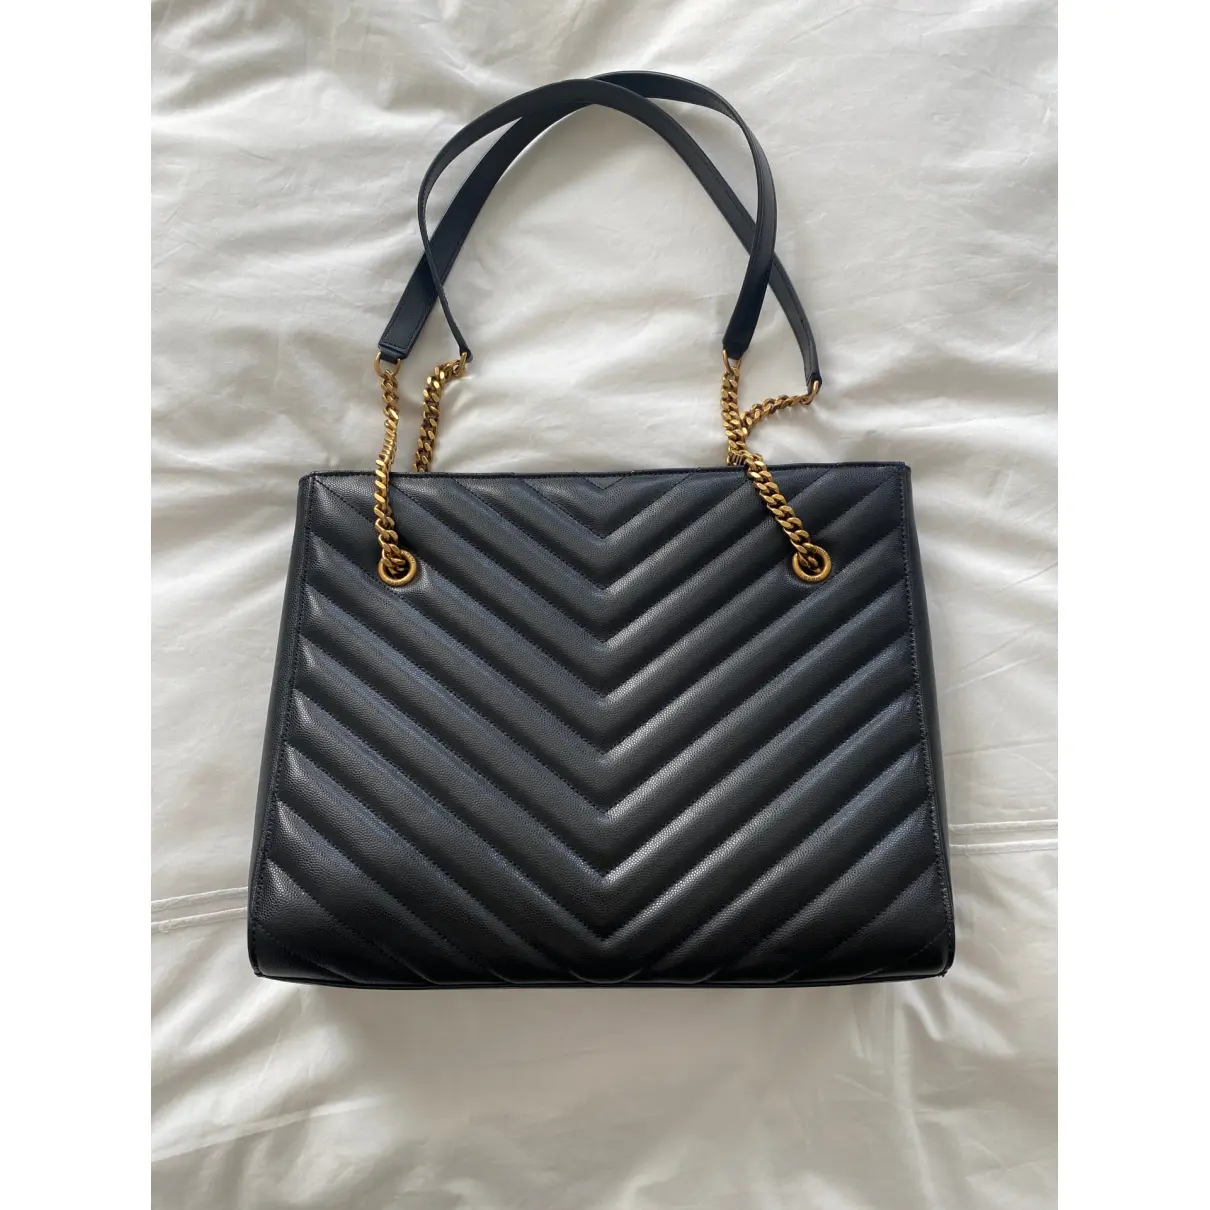 Buy Saint Laurent Loulou Shopping leather handbag online